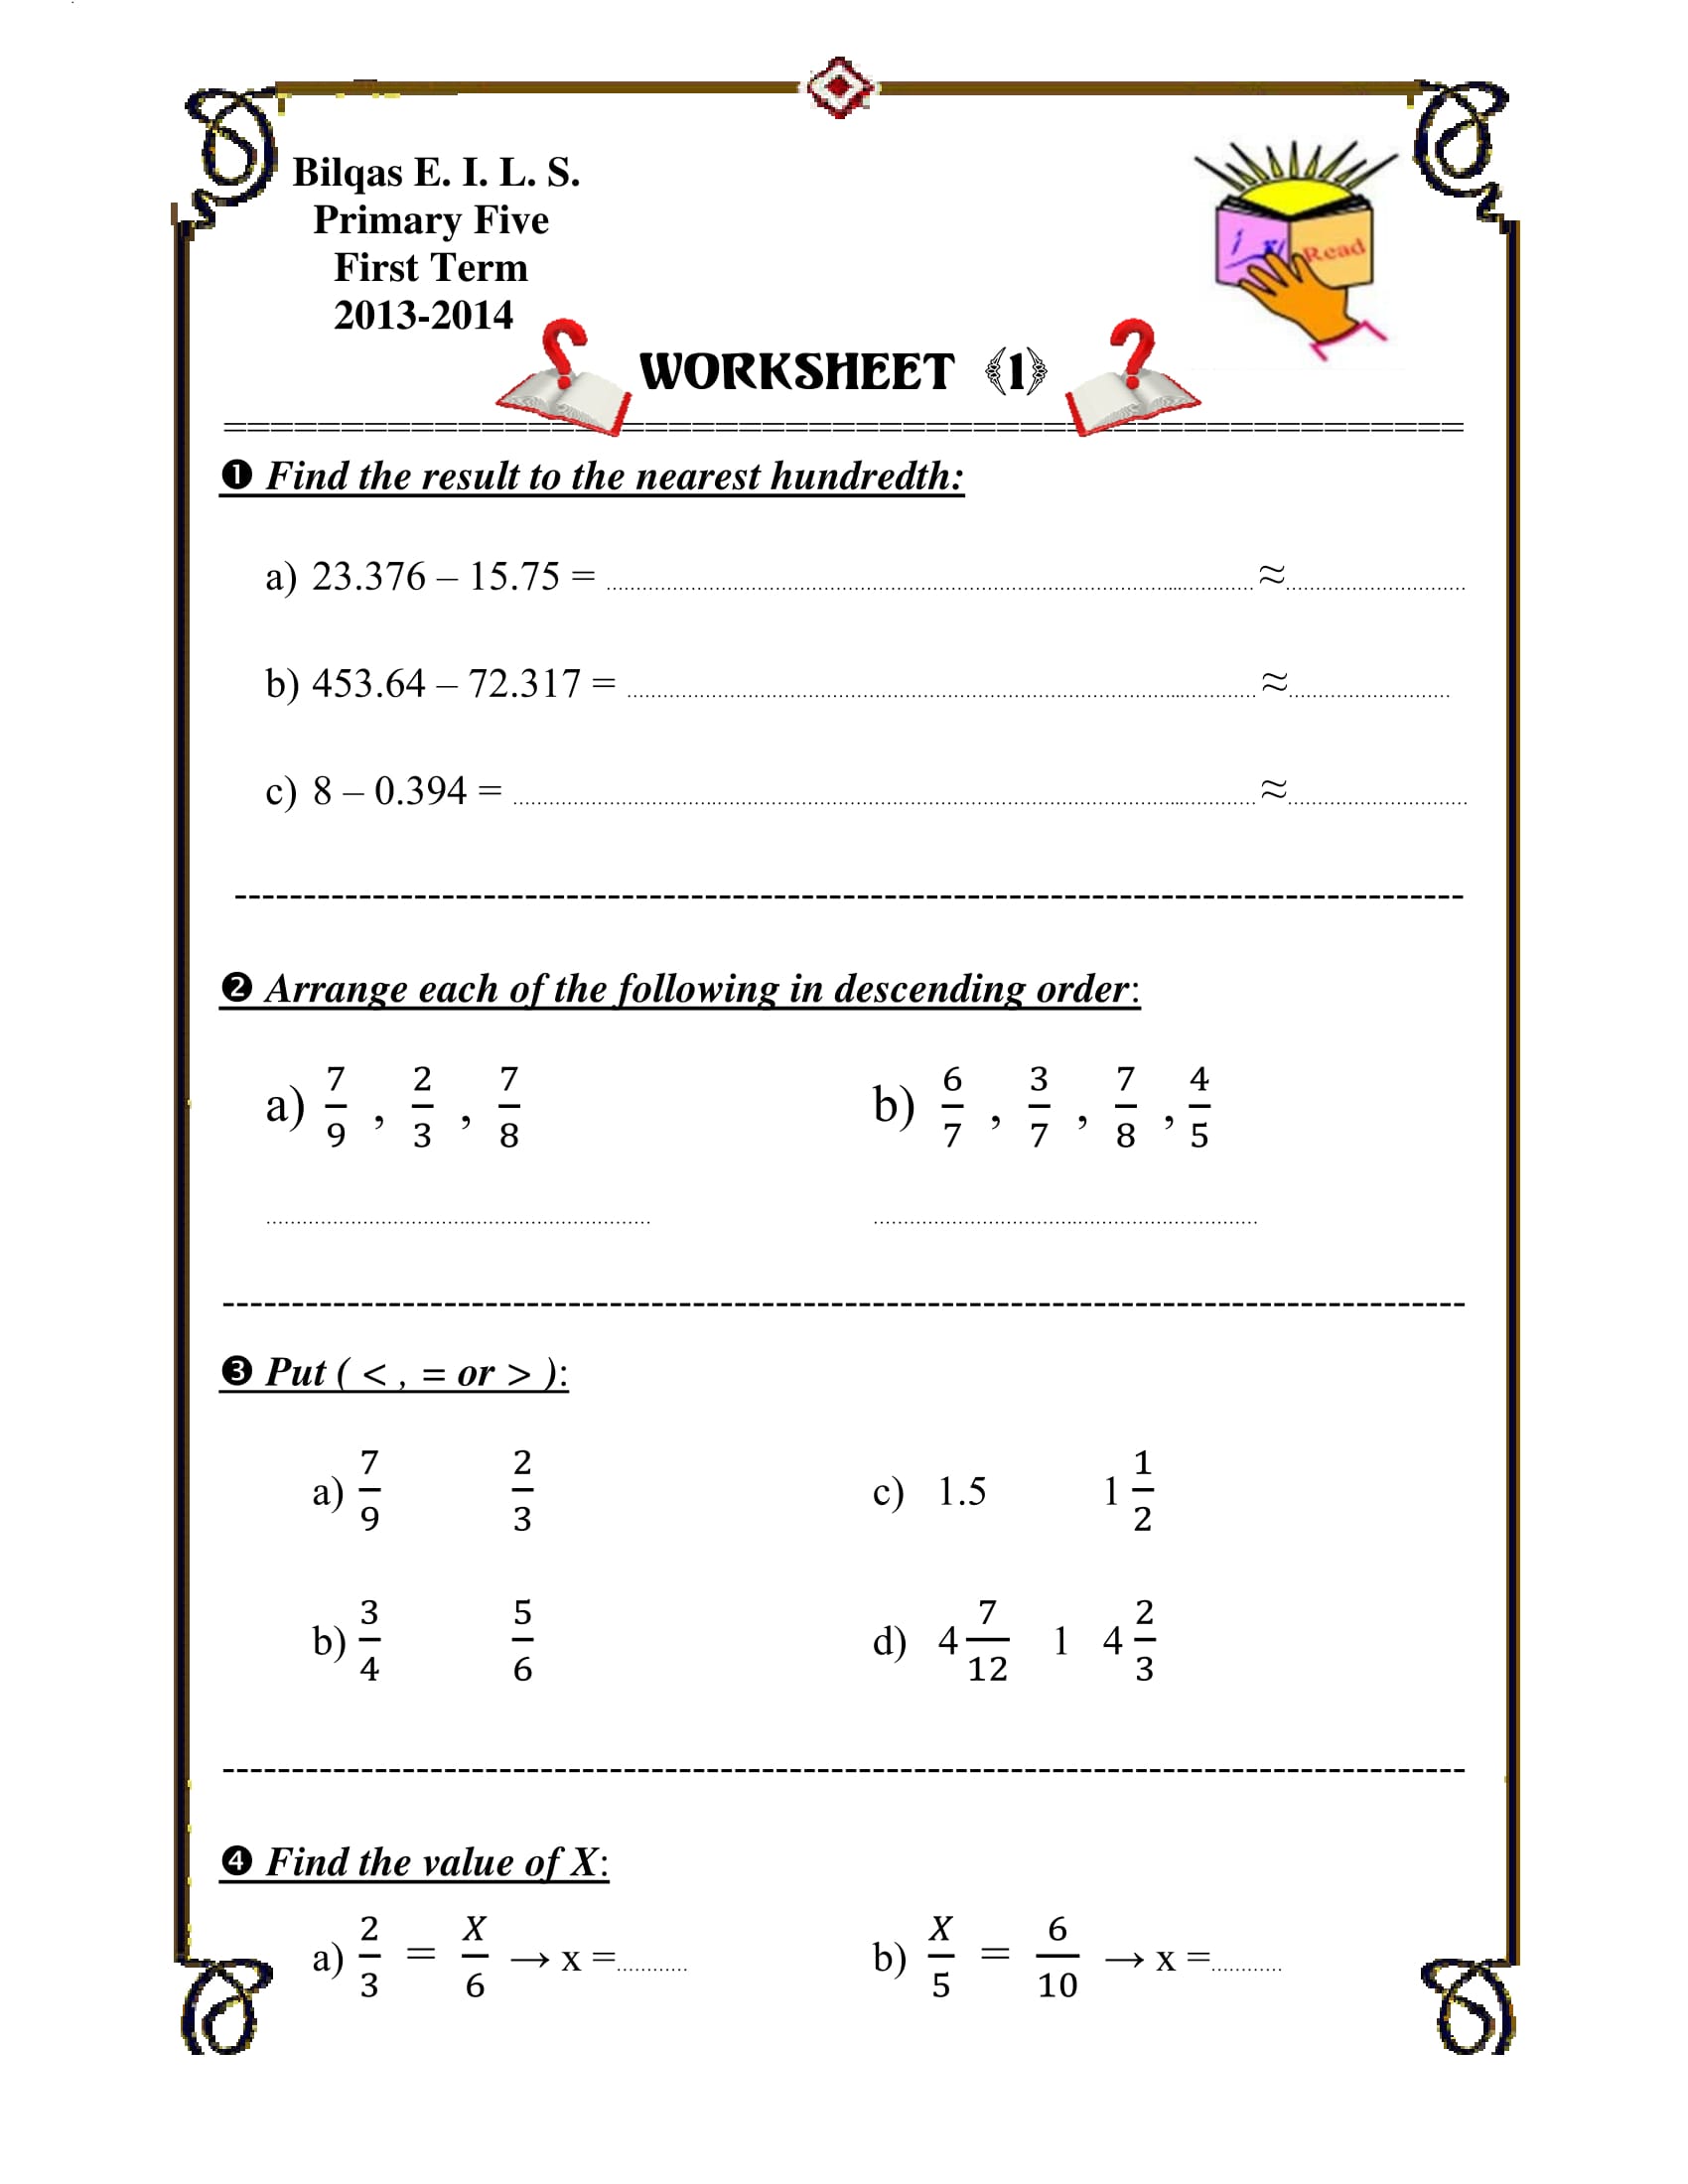 worksheet فى Maths للصف الخامس الابتدائى اللغات الترم الاول